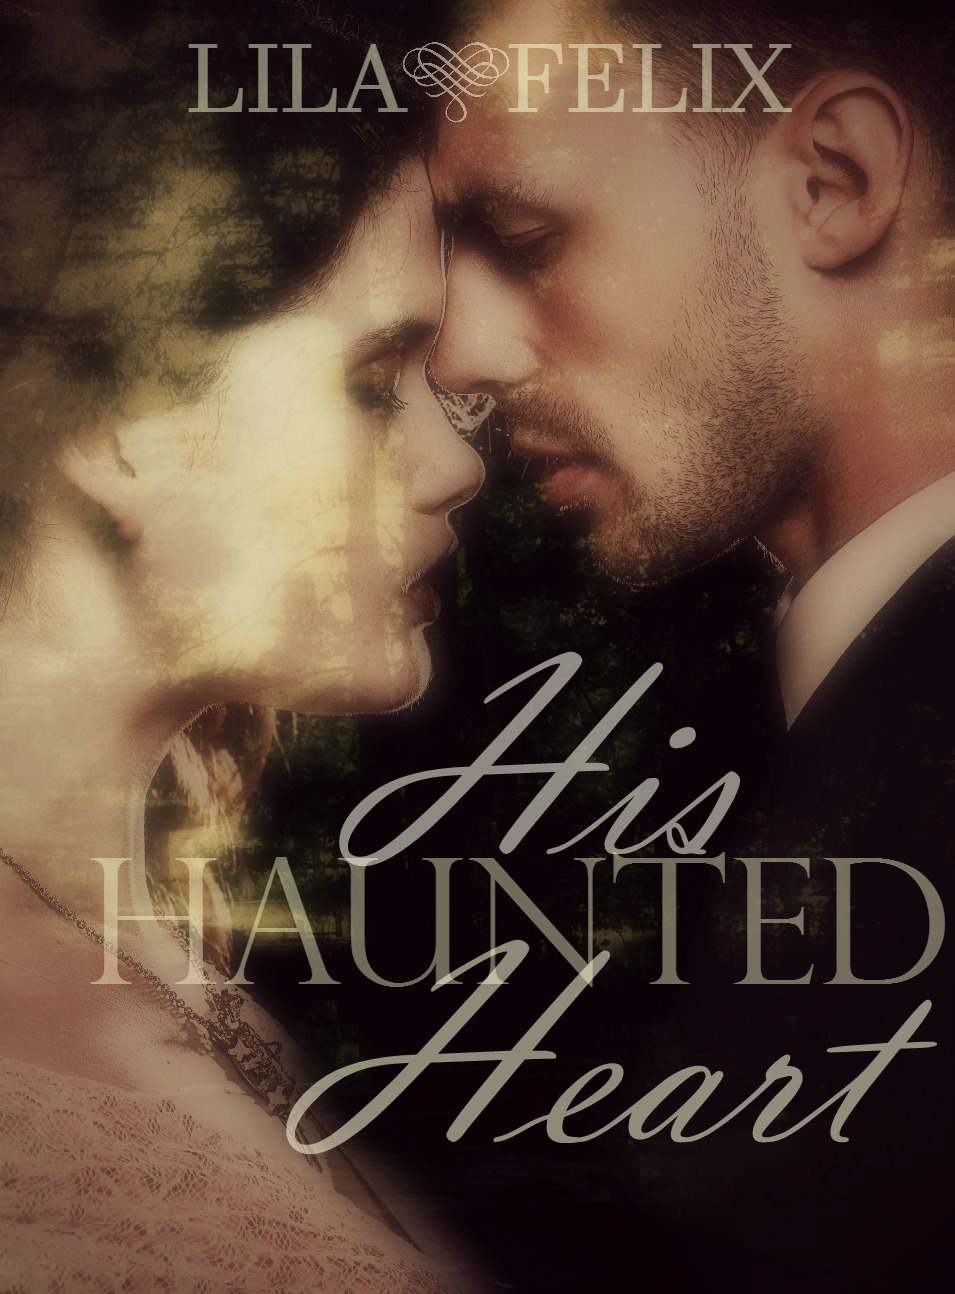 His Haunted Heart by Lila Felix